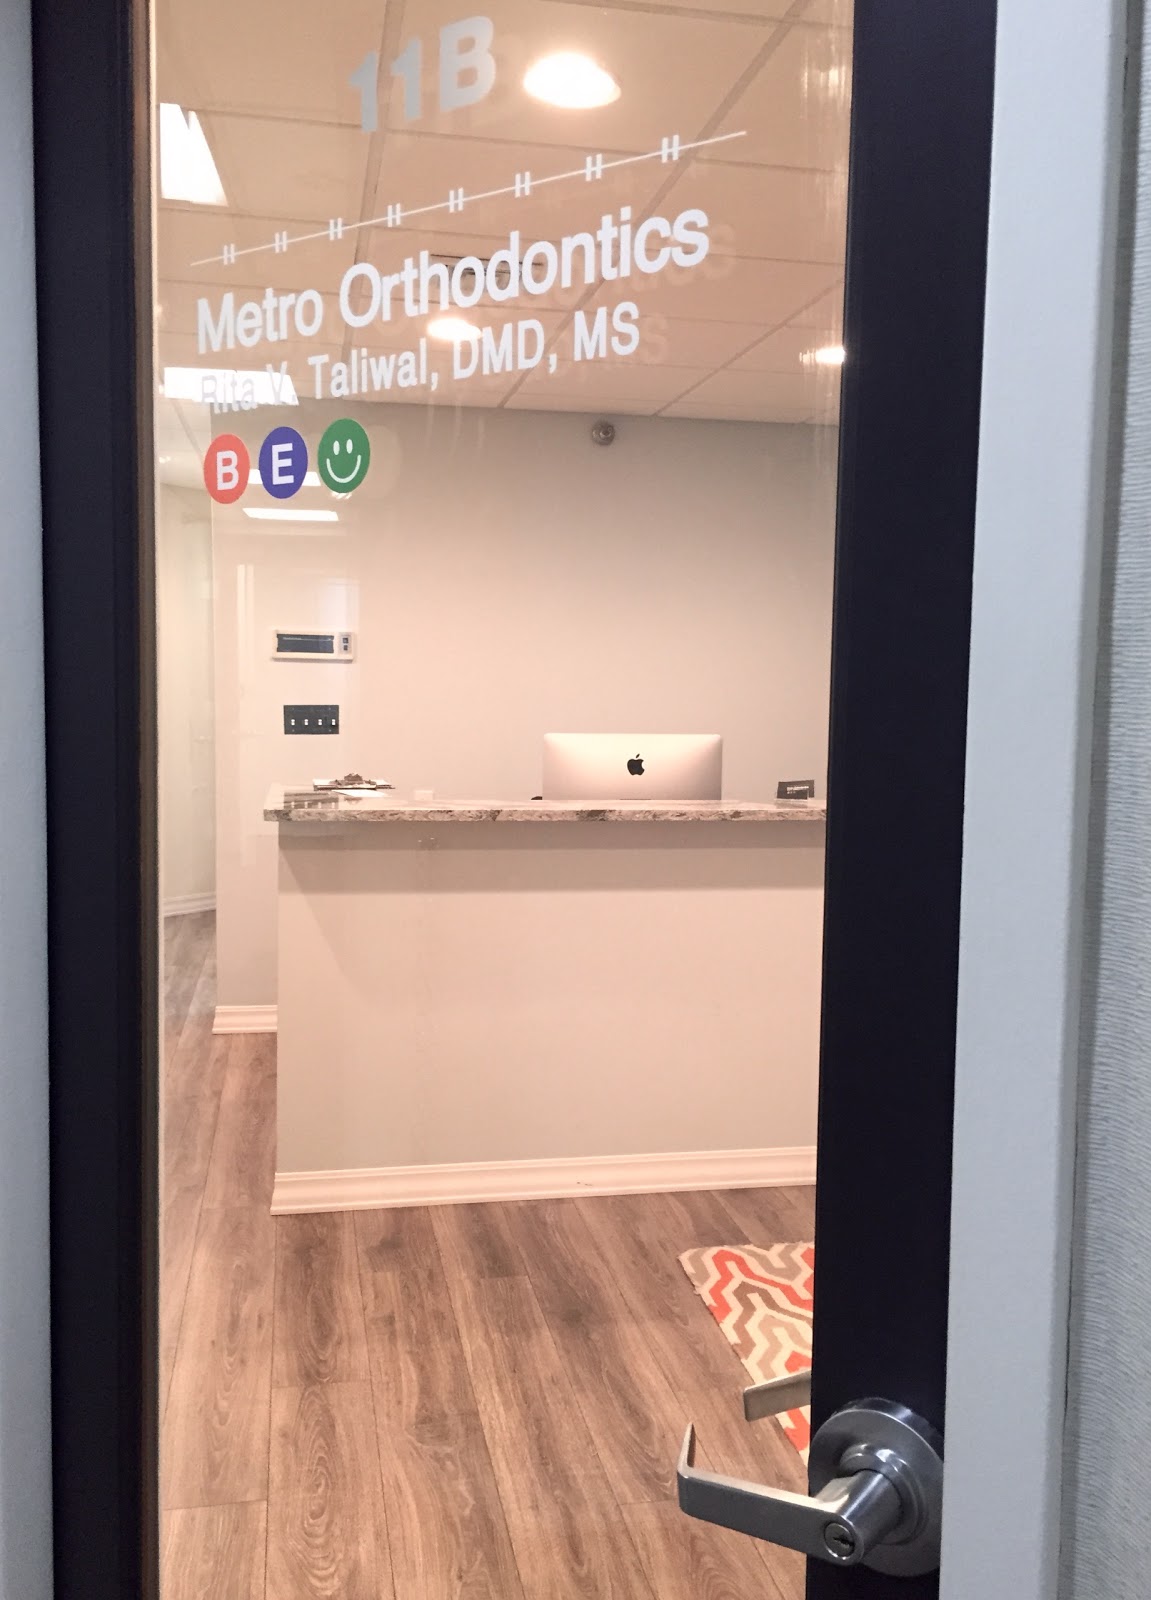 Photo of Metro Orthodontics, Rita V. Taliwal, DMD, MS in New York City, New York, United States - 4 Picture of Point of interest, Establishment, Health, Dentist